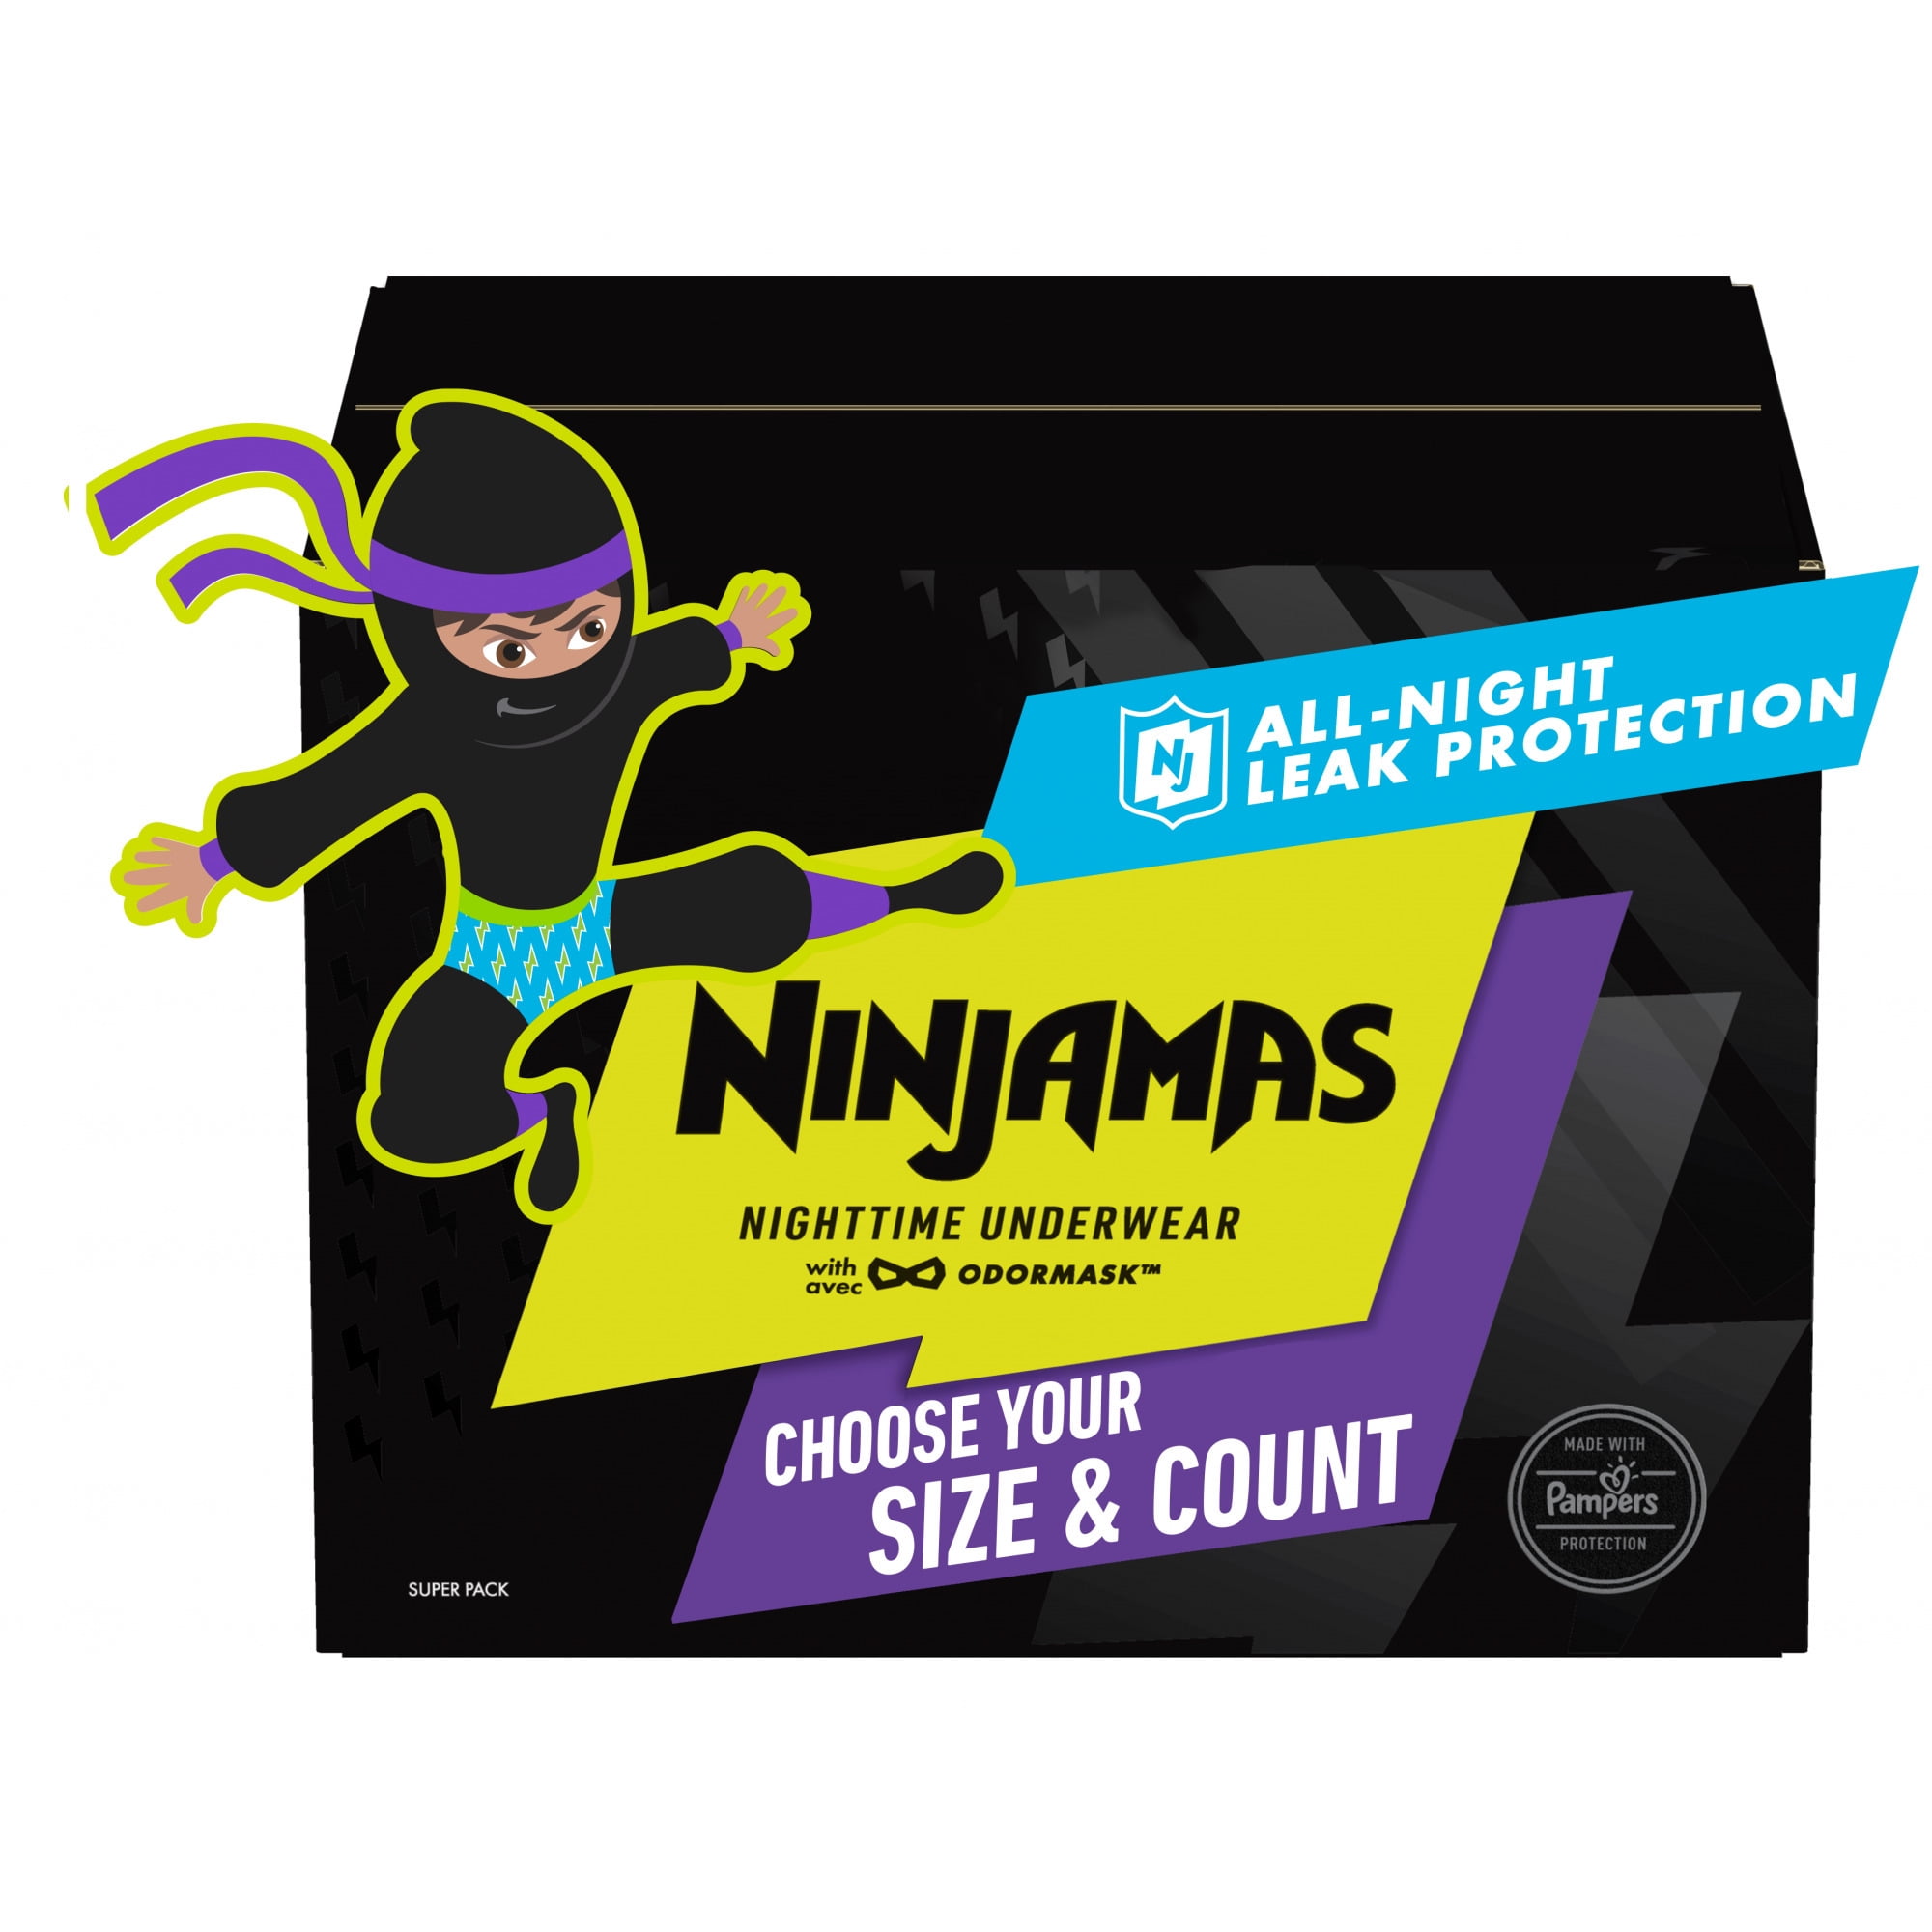 Pampers - 😃 Nothing but smiles when wearing #Ninjamas! 😃